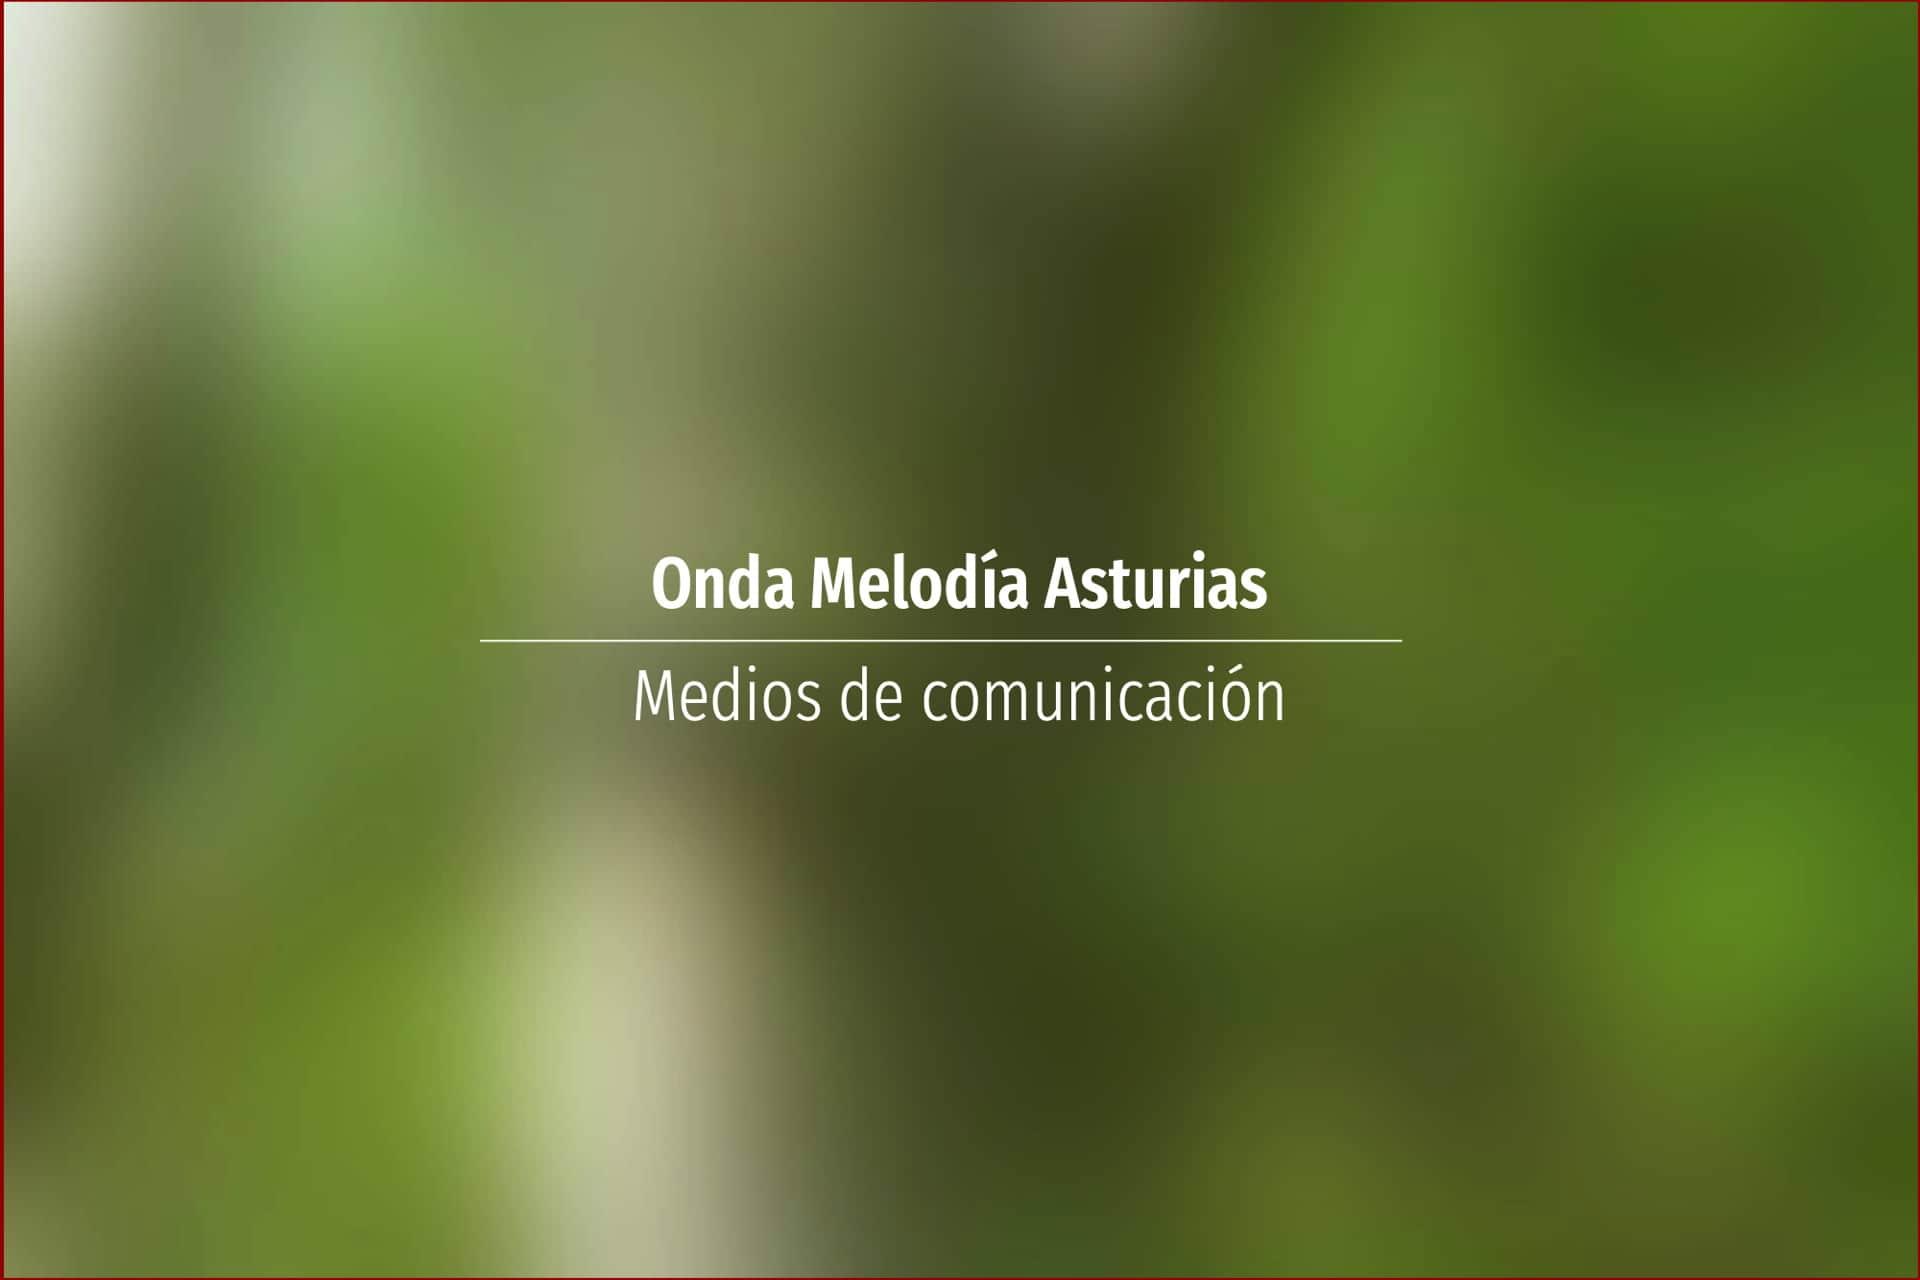 Onda Melodía Asturias